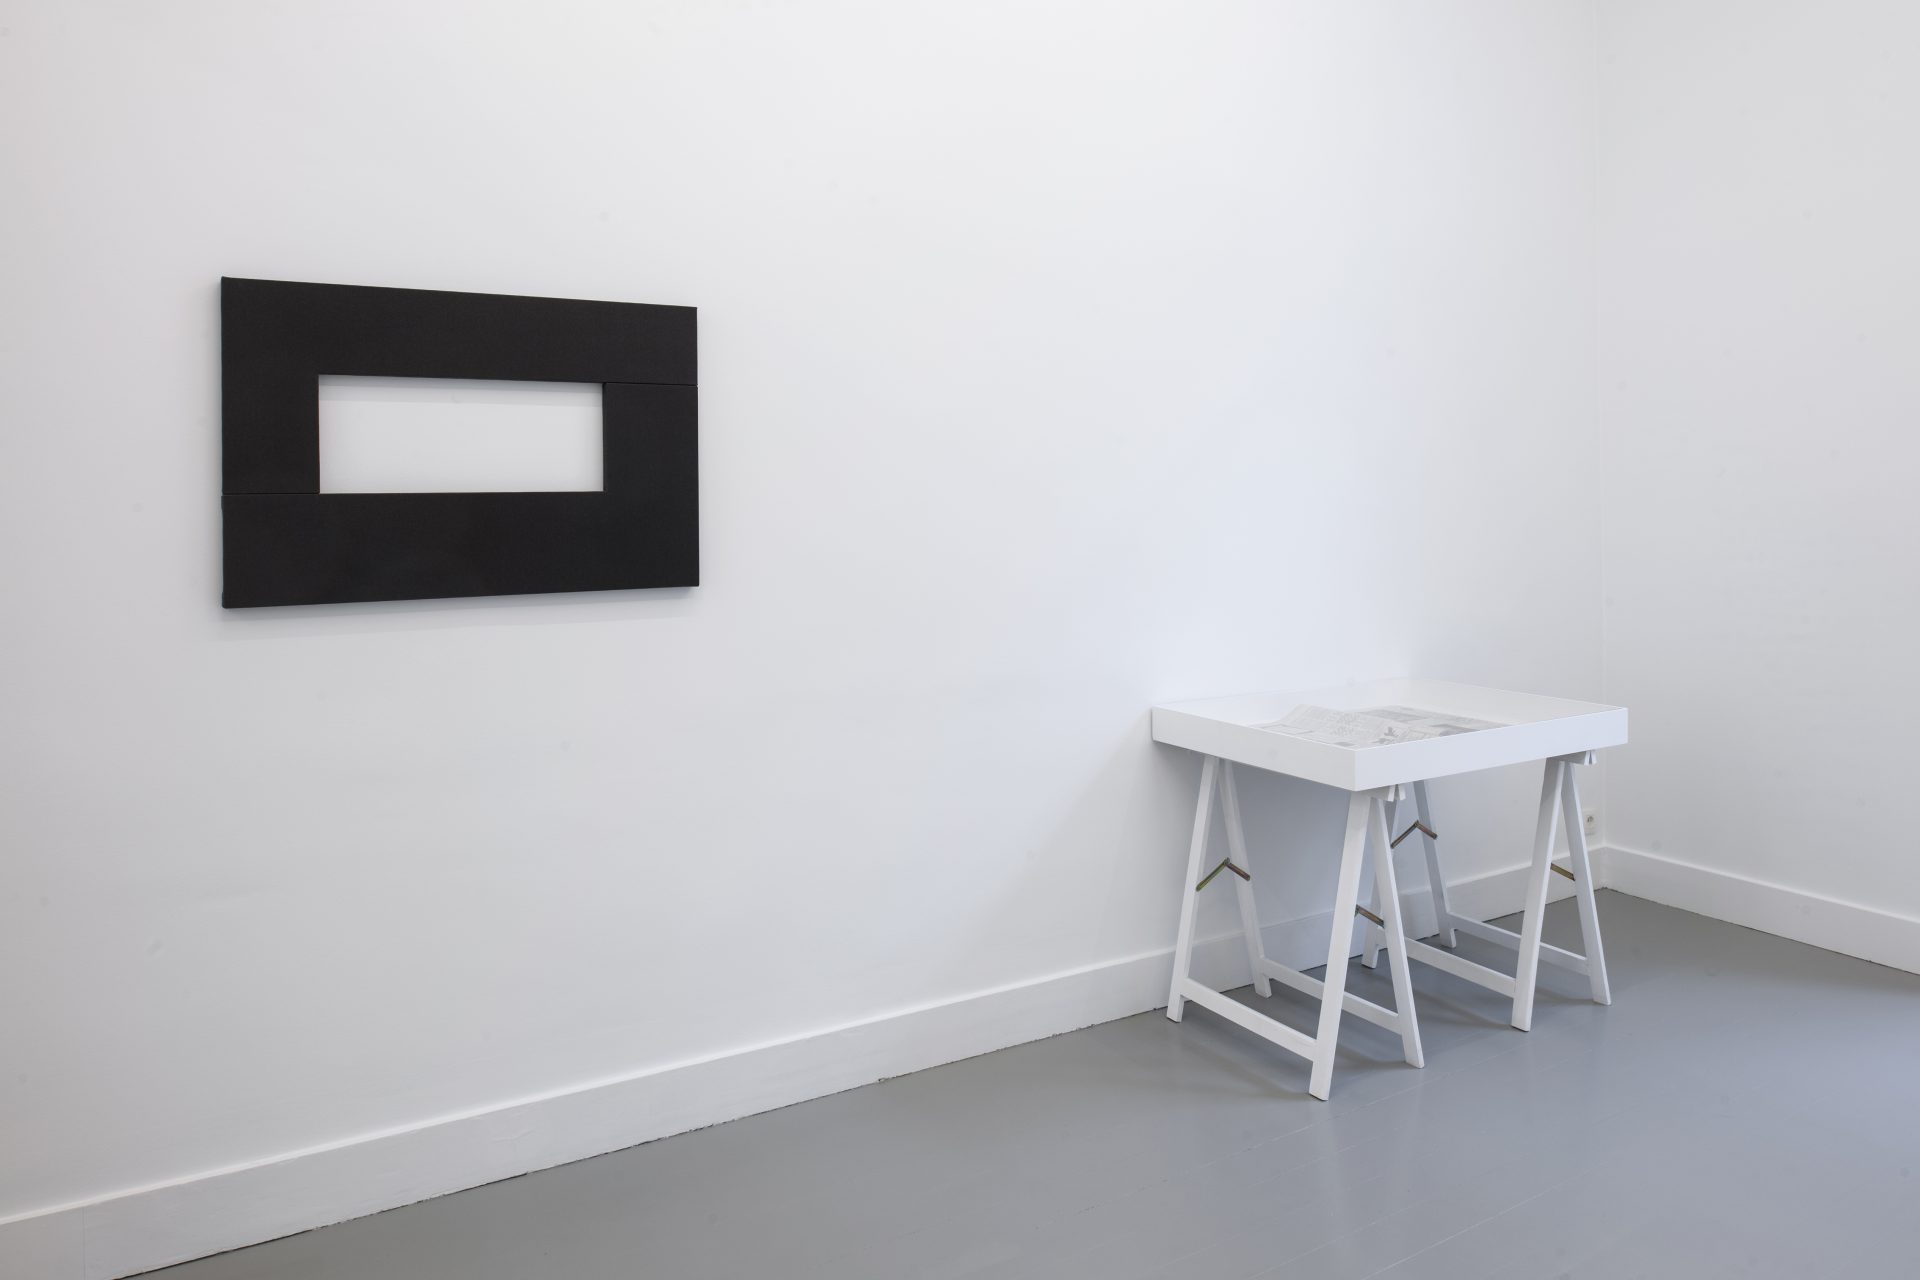 Ian Wilson -installation view at Jan Mot, 2019